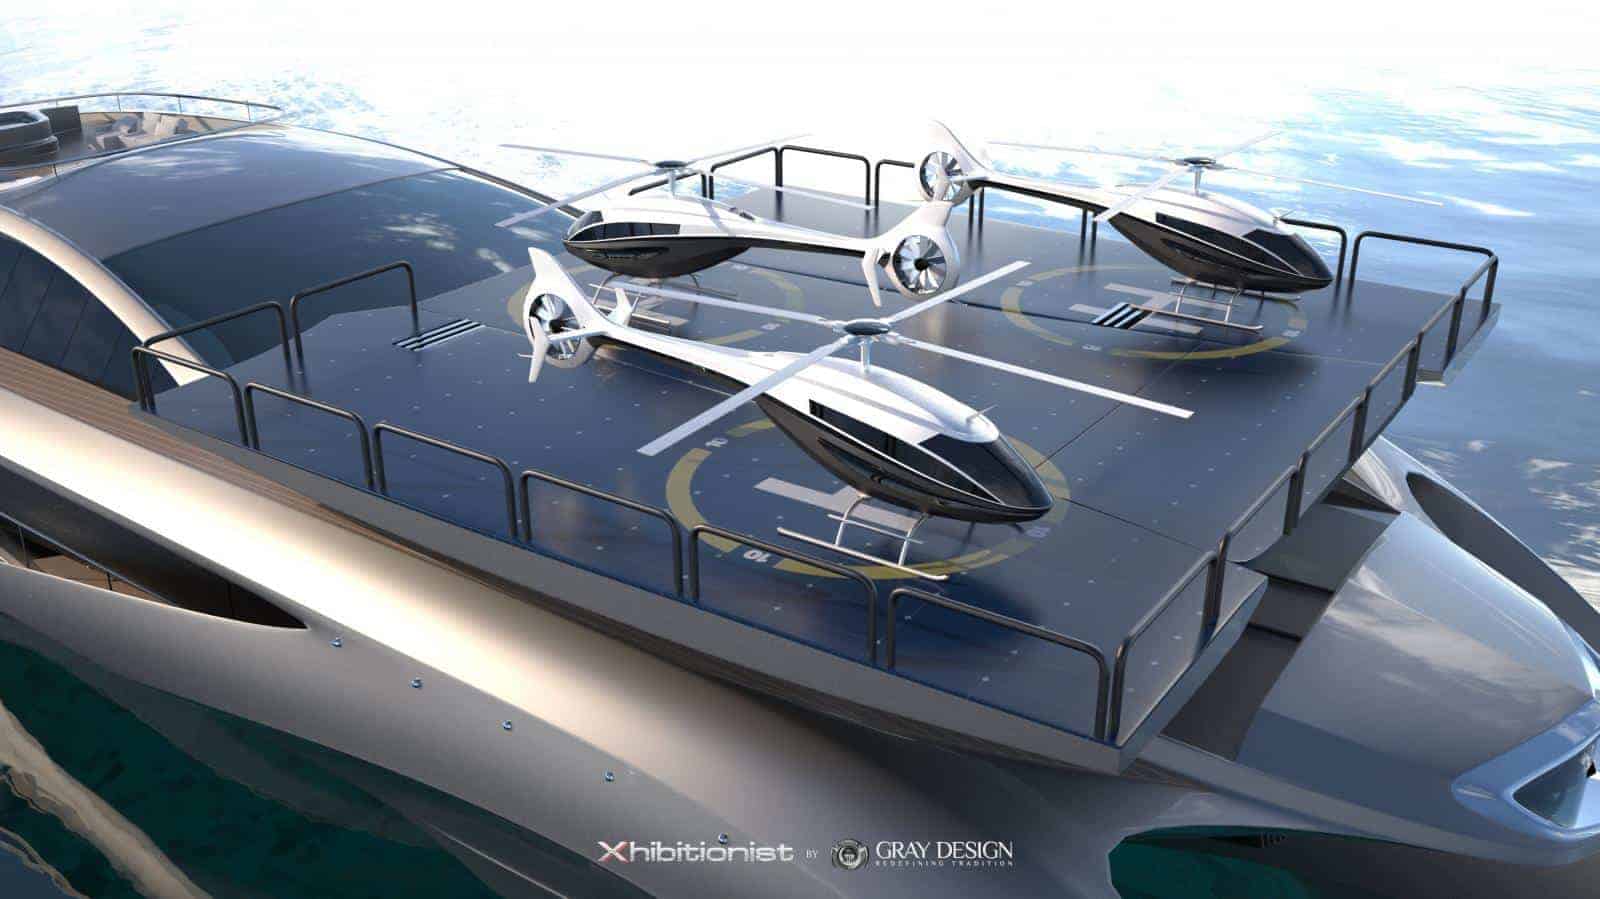 Gray Design’s Xhibitionist yacht and Xhibit G car 5